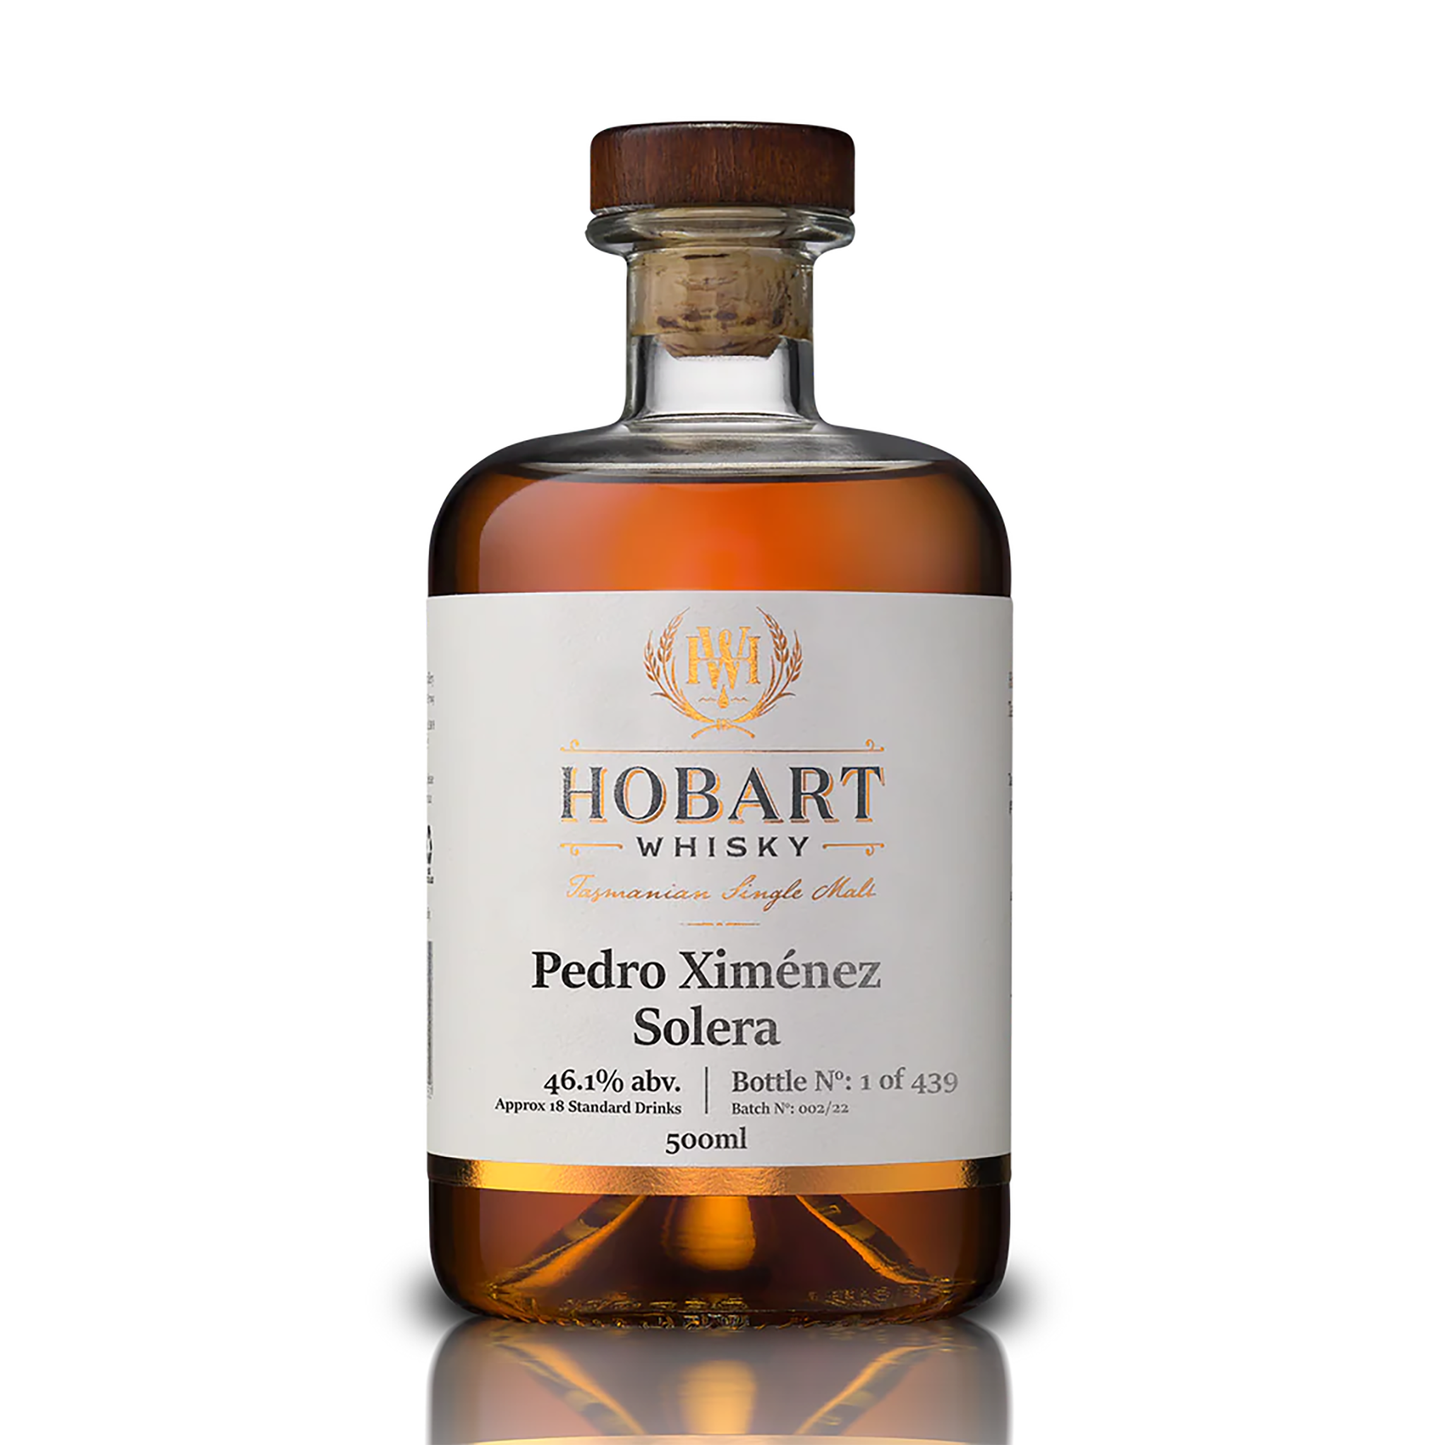 Hobart Whisky Pedro Ximenez Solera Single Malt Whisky 500ml